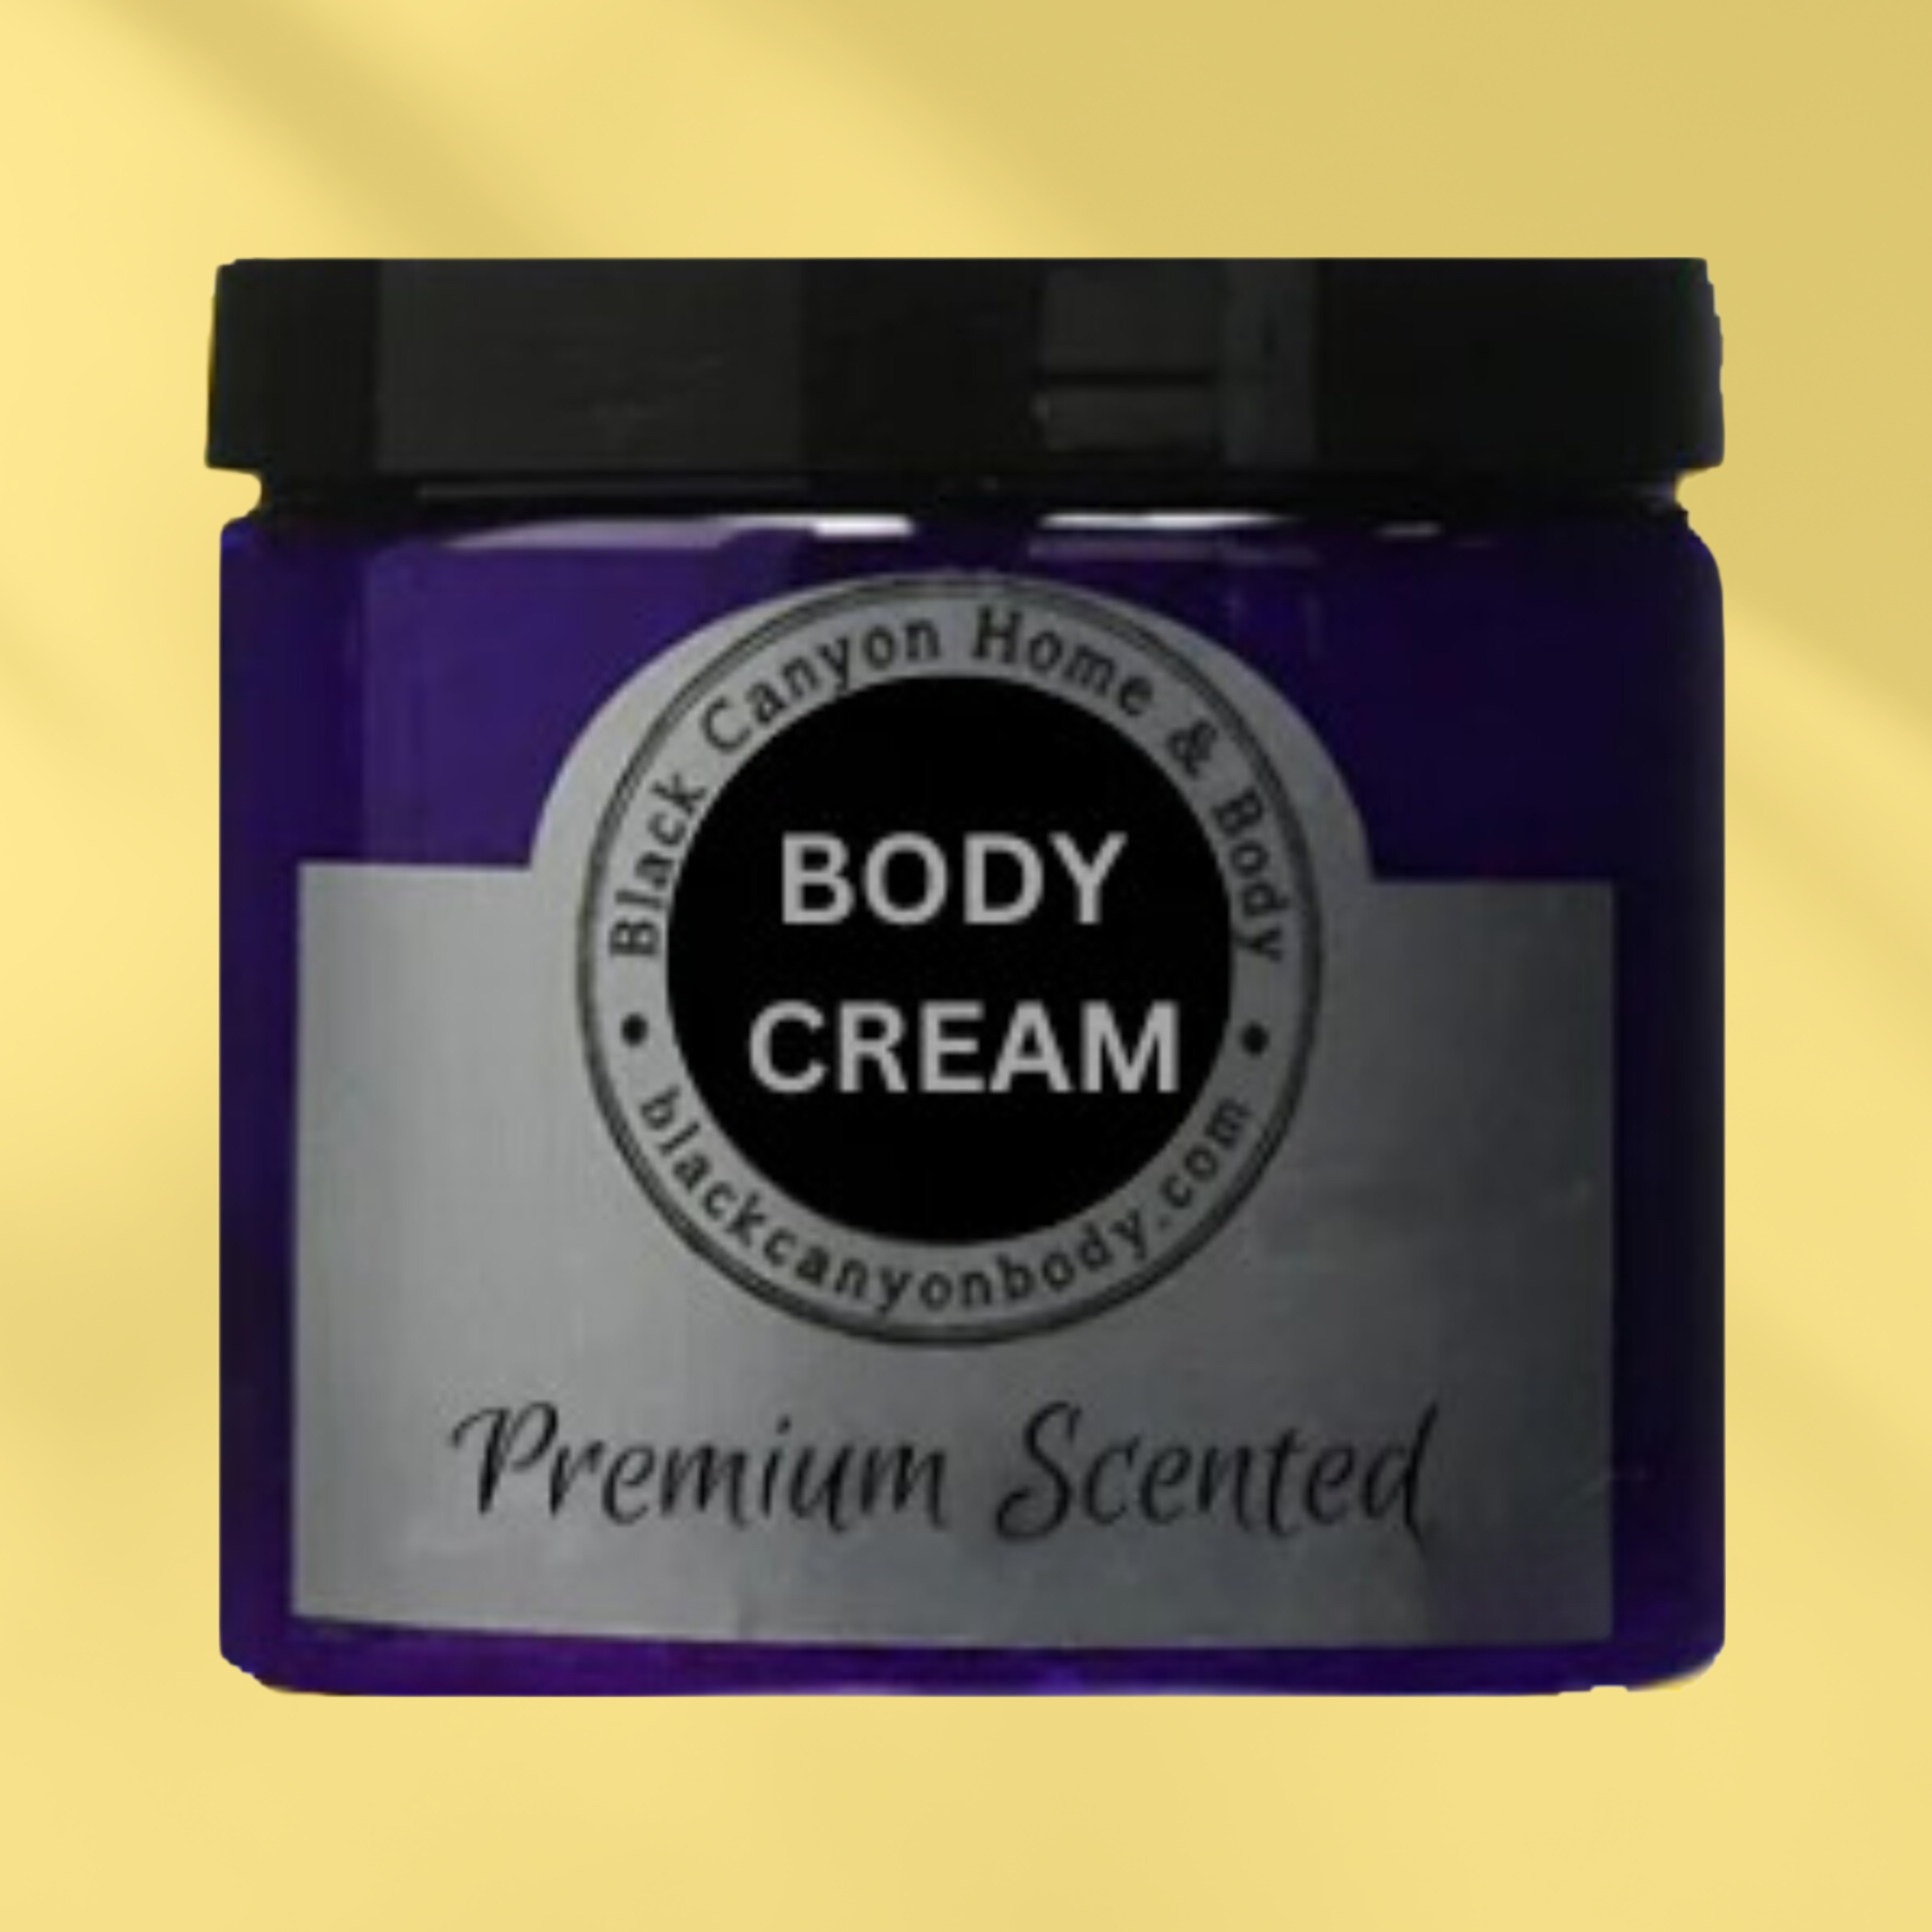 Black Canyon Bartlett Pear & Brandy Scented Luxury Body Cream with Aloe